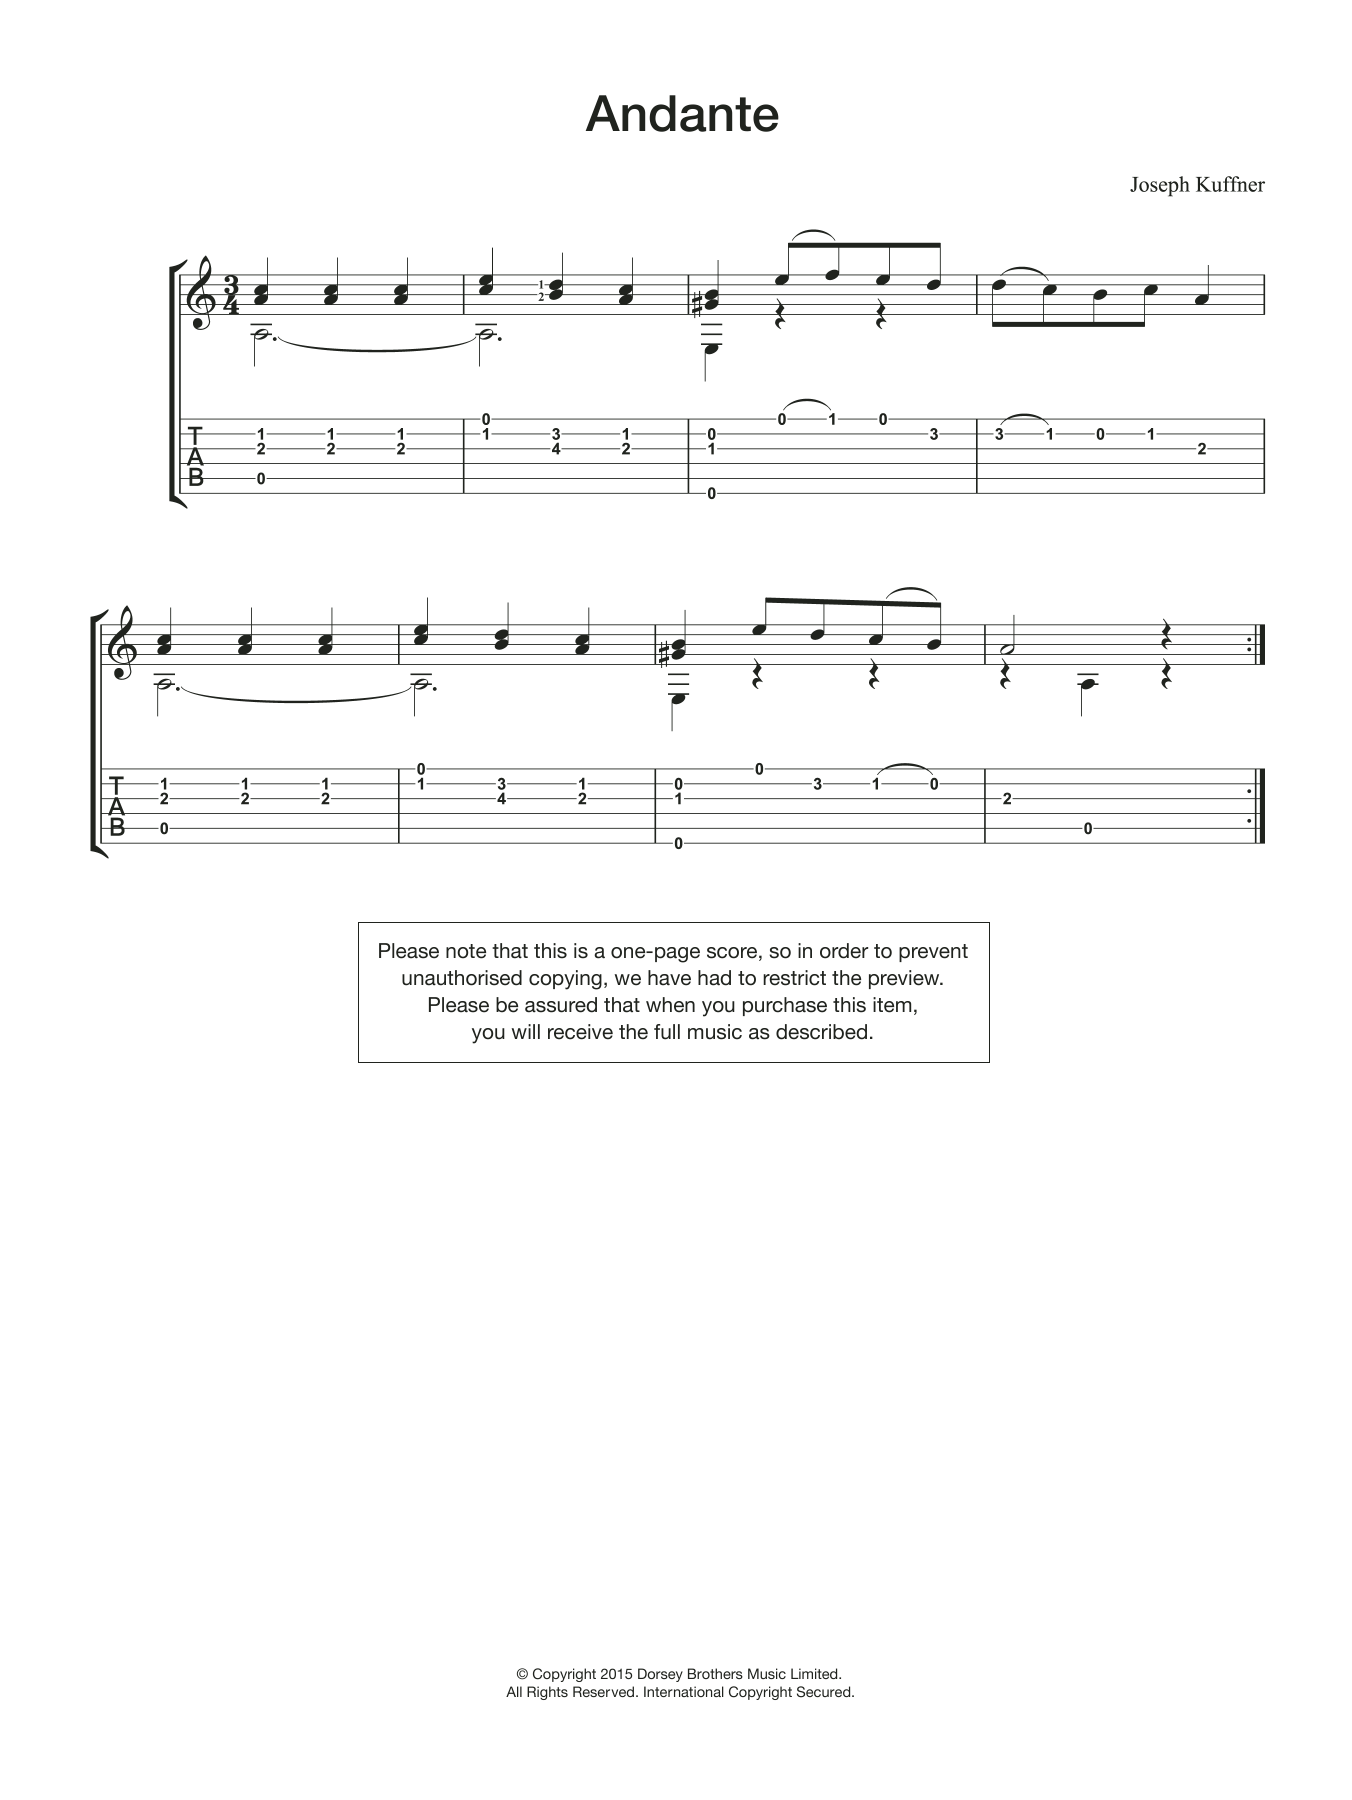 Joseph Kuffner Andante Sheet Music Notes & Chords for Guitar - Download or Print PDF